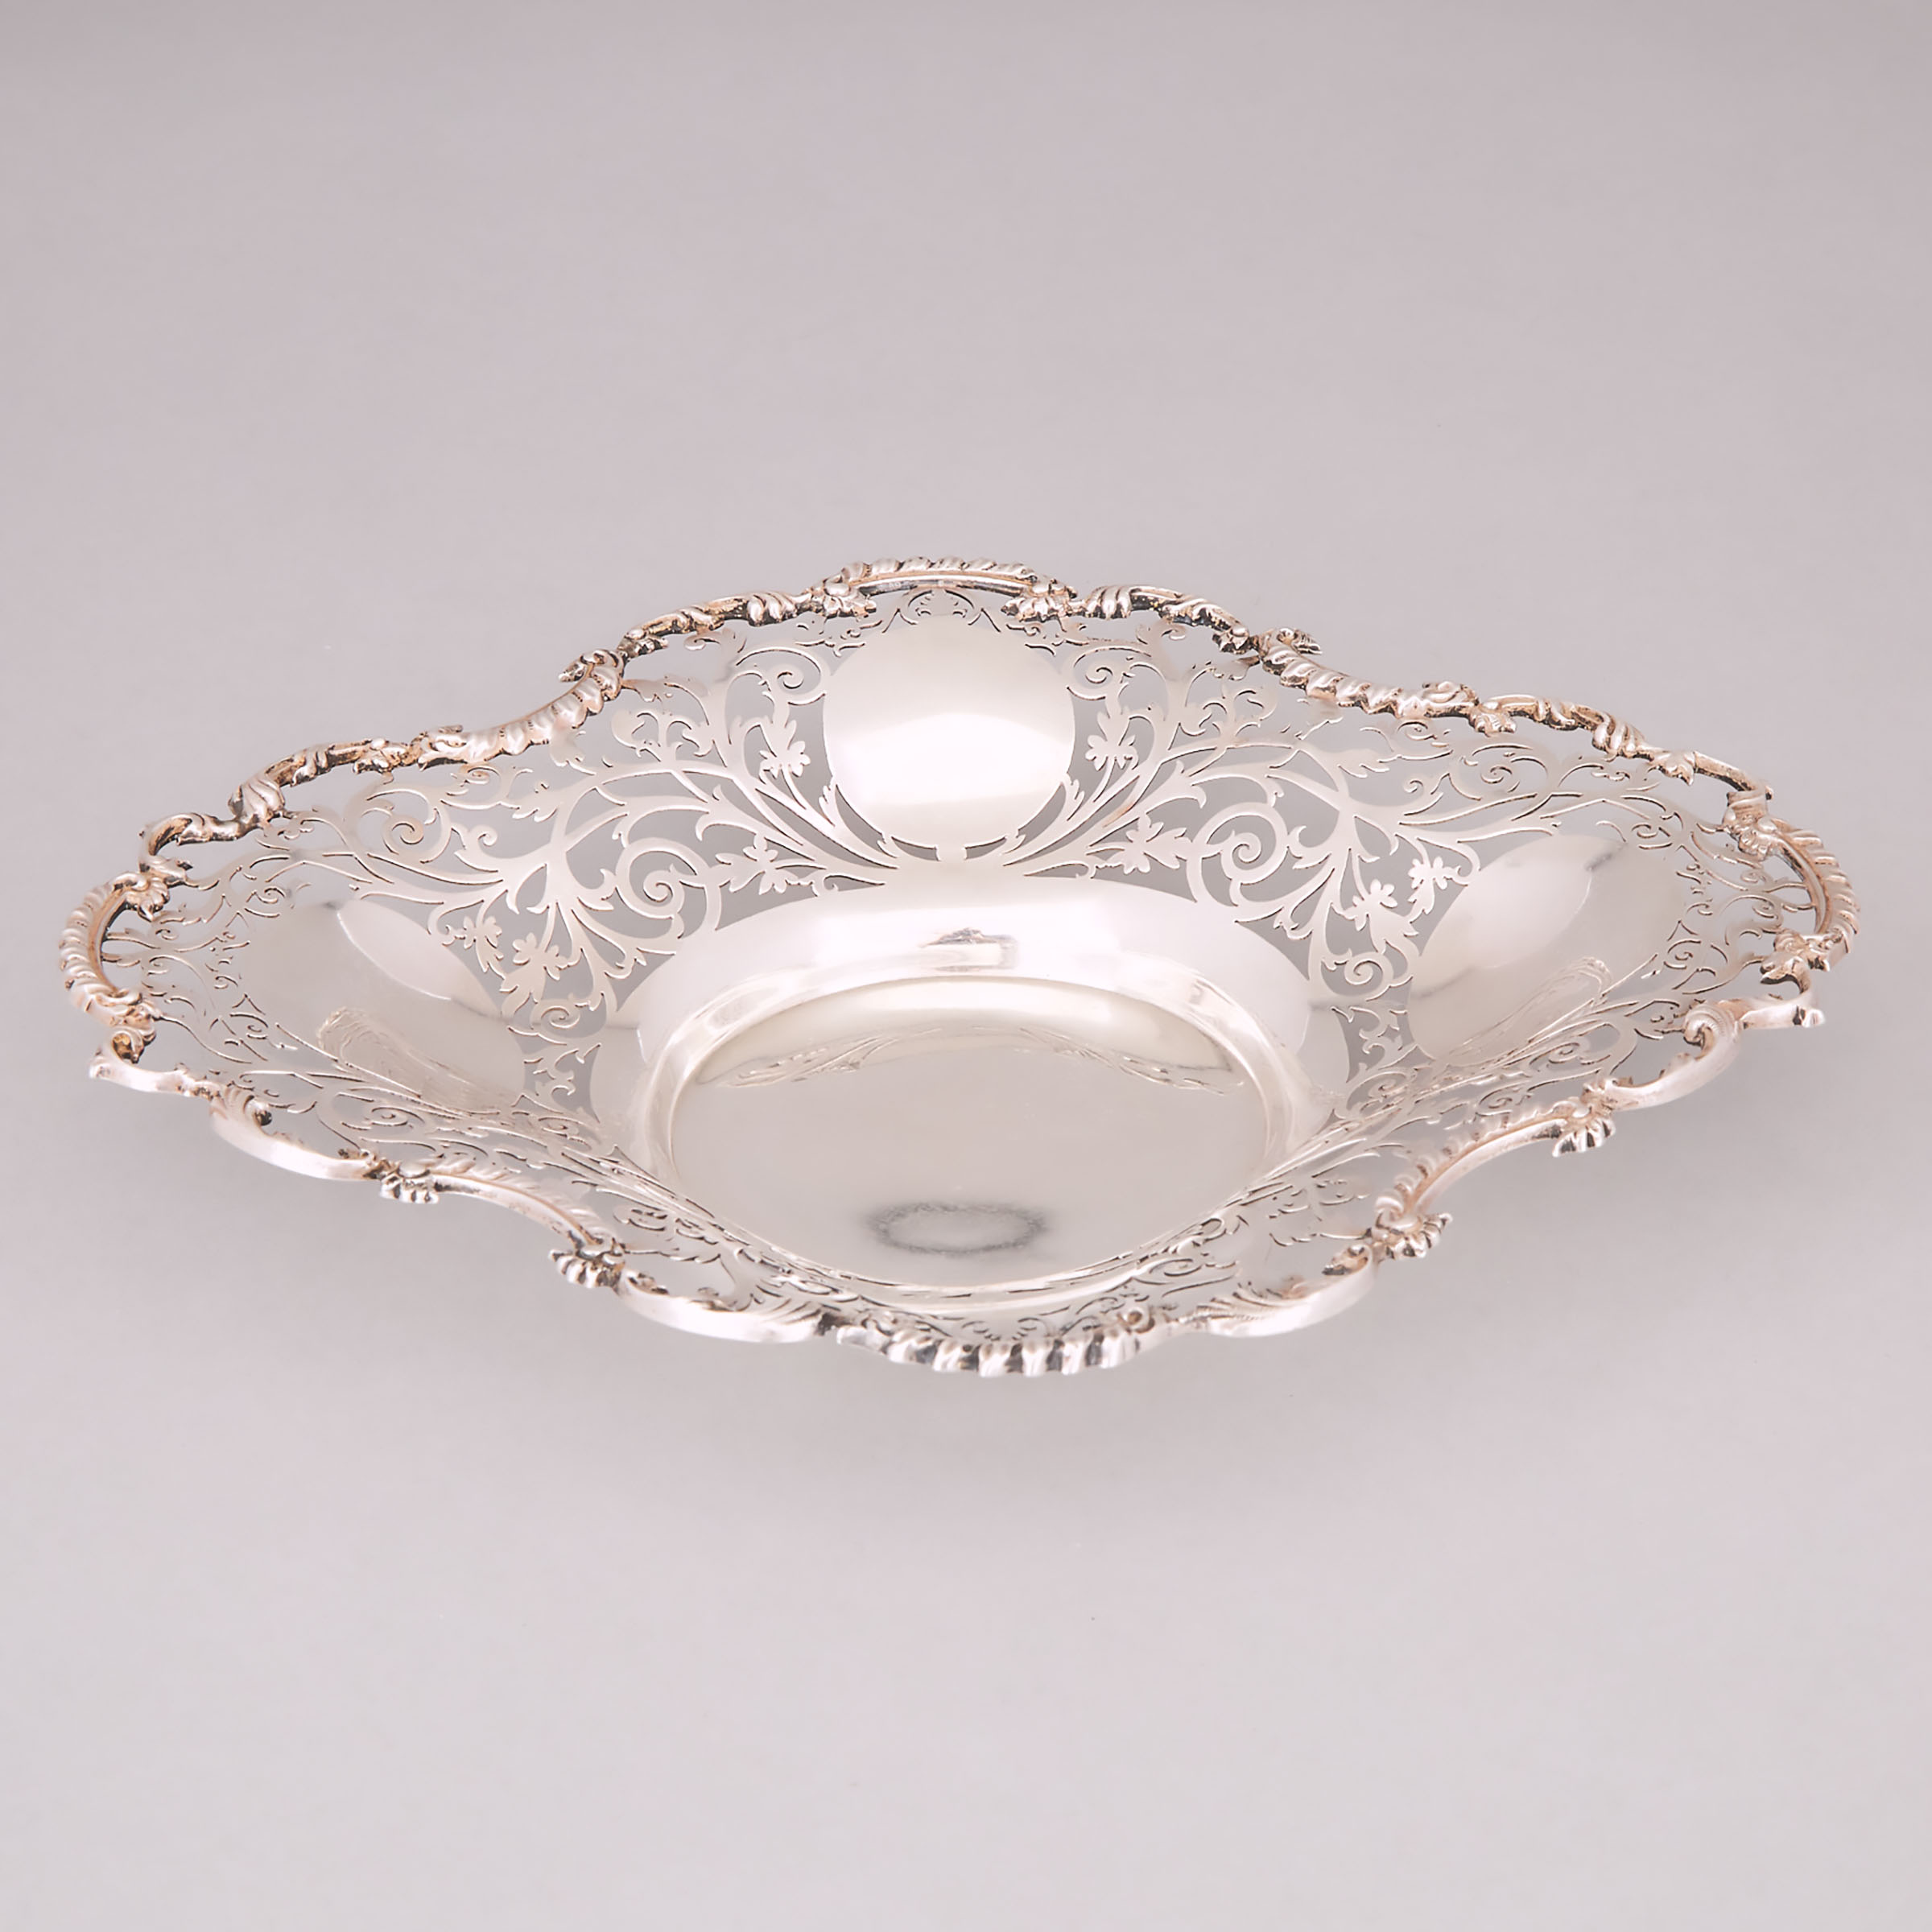 Edwardian Silver Pierced Oval Dish, James Dixon & Sons, Sheffield, 1905